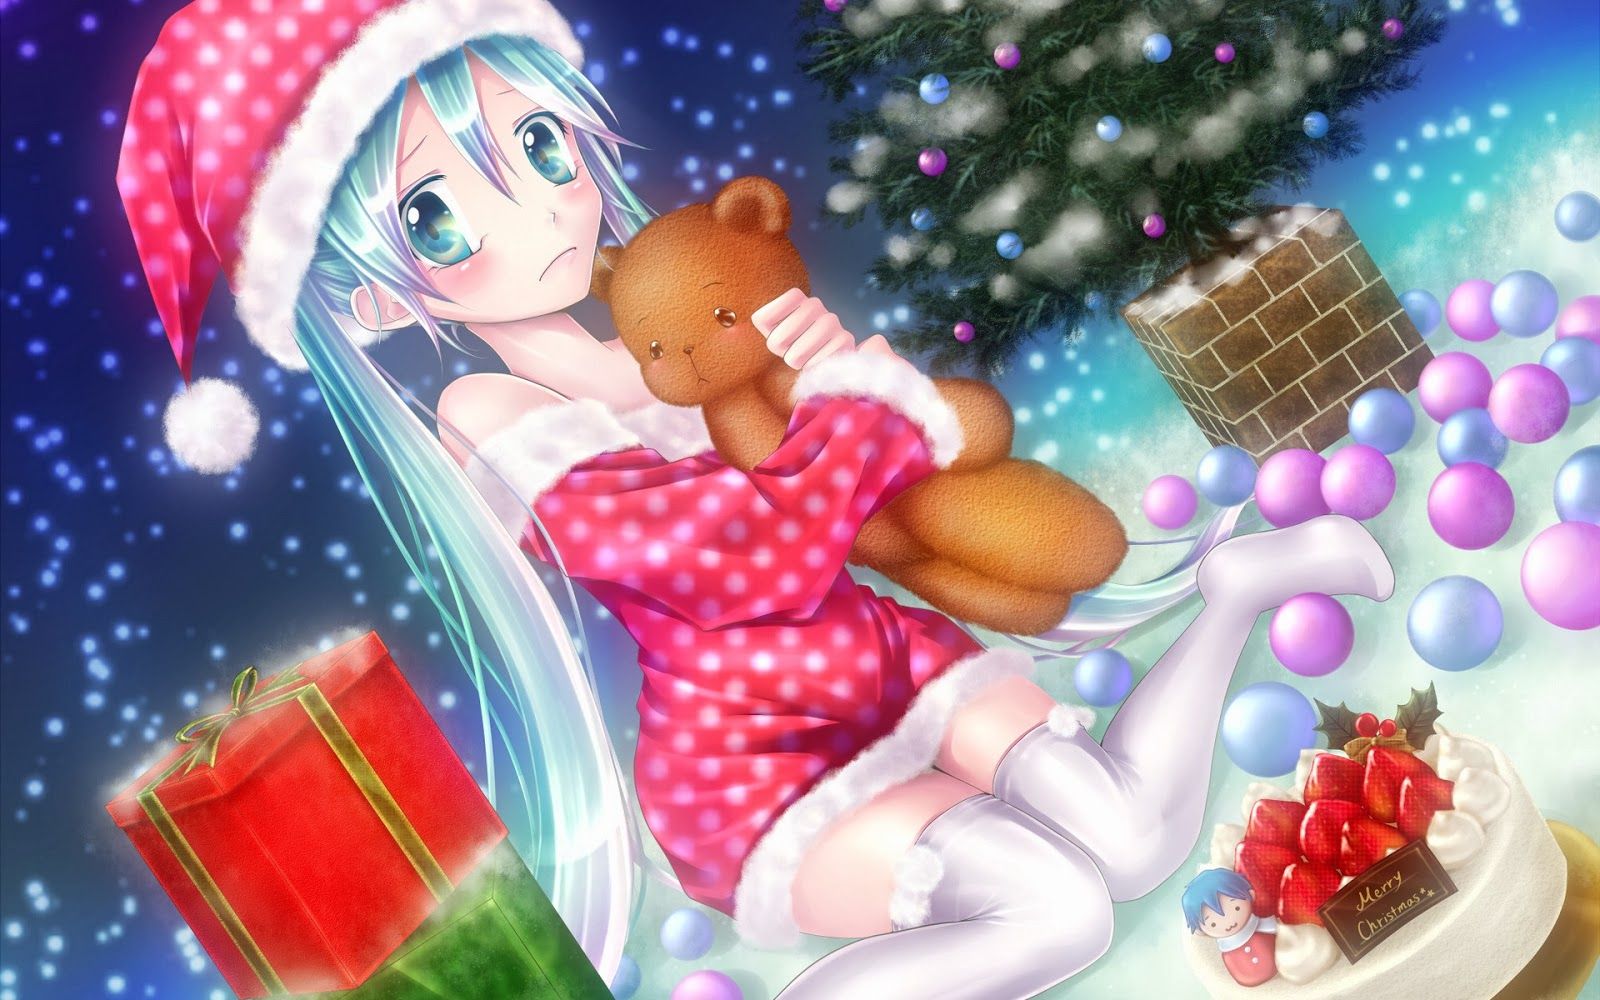 beautiful desktop wallpaper 2014: Anime girl on the Christmas eve Wallpaper